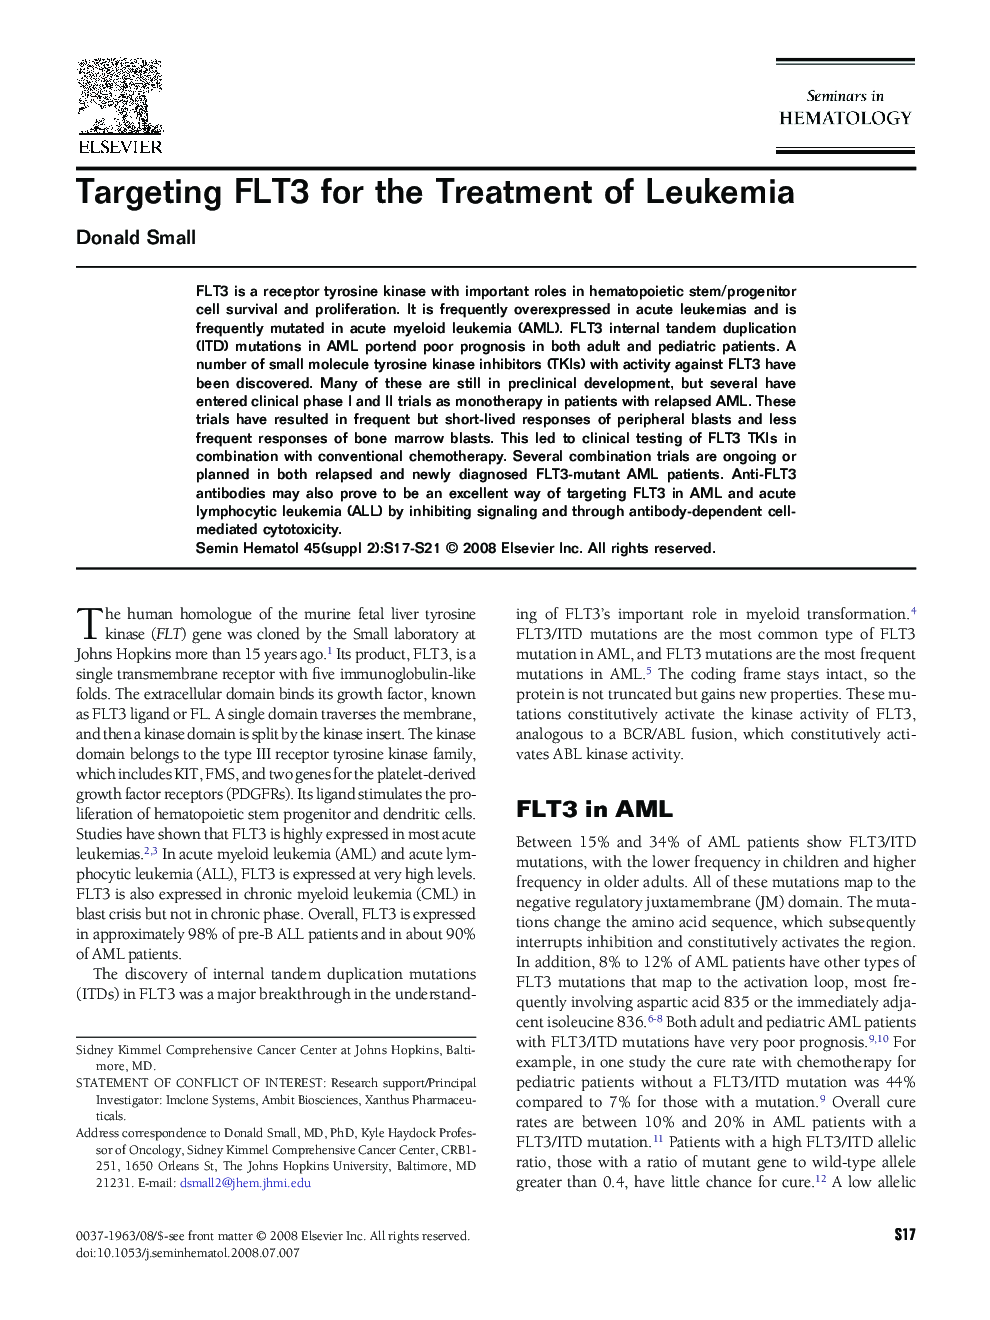 Targeting FLT3 for the Treatment of Leukemia 